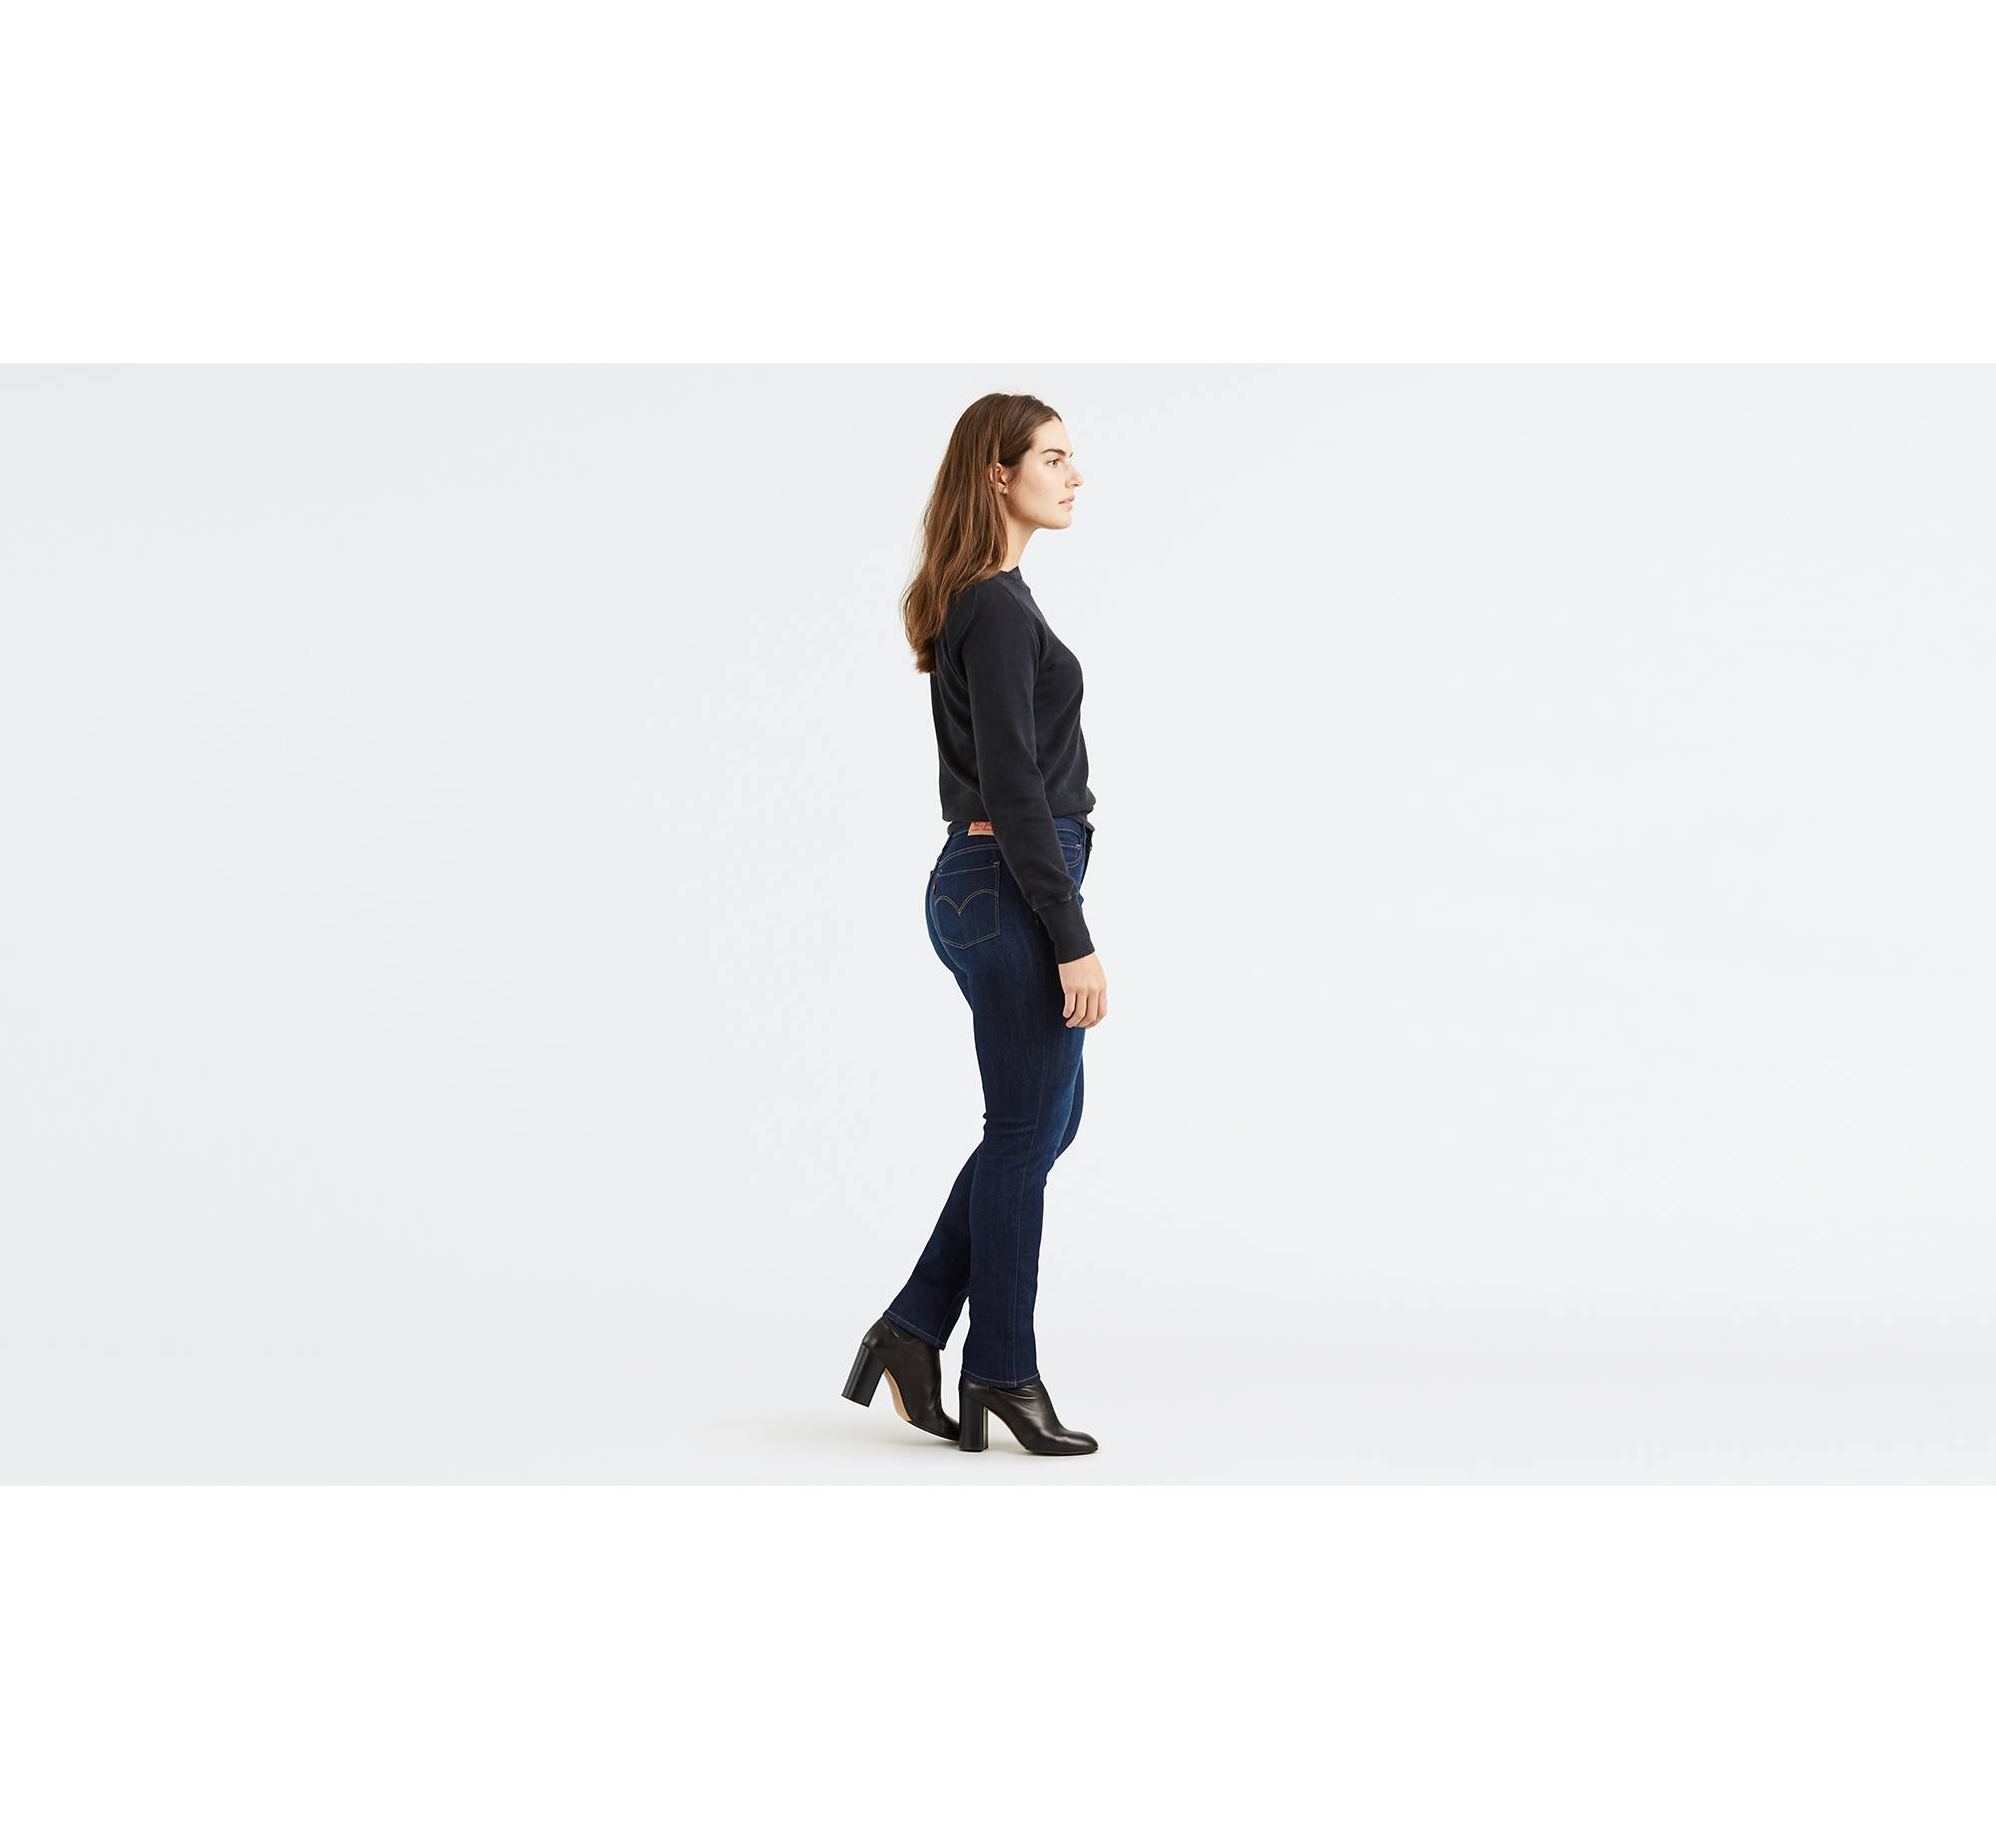 Volar cometa Interminable Método 712 Slim Women's Jeans - Dark Wash | Levi's® US